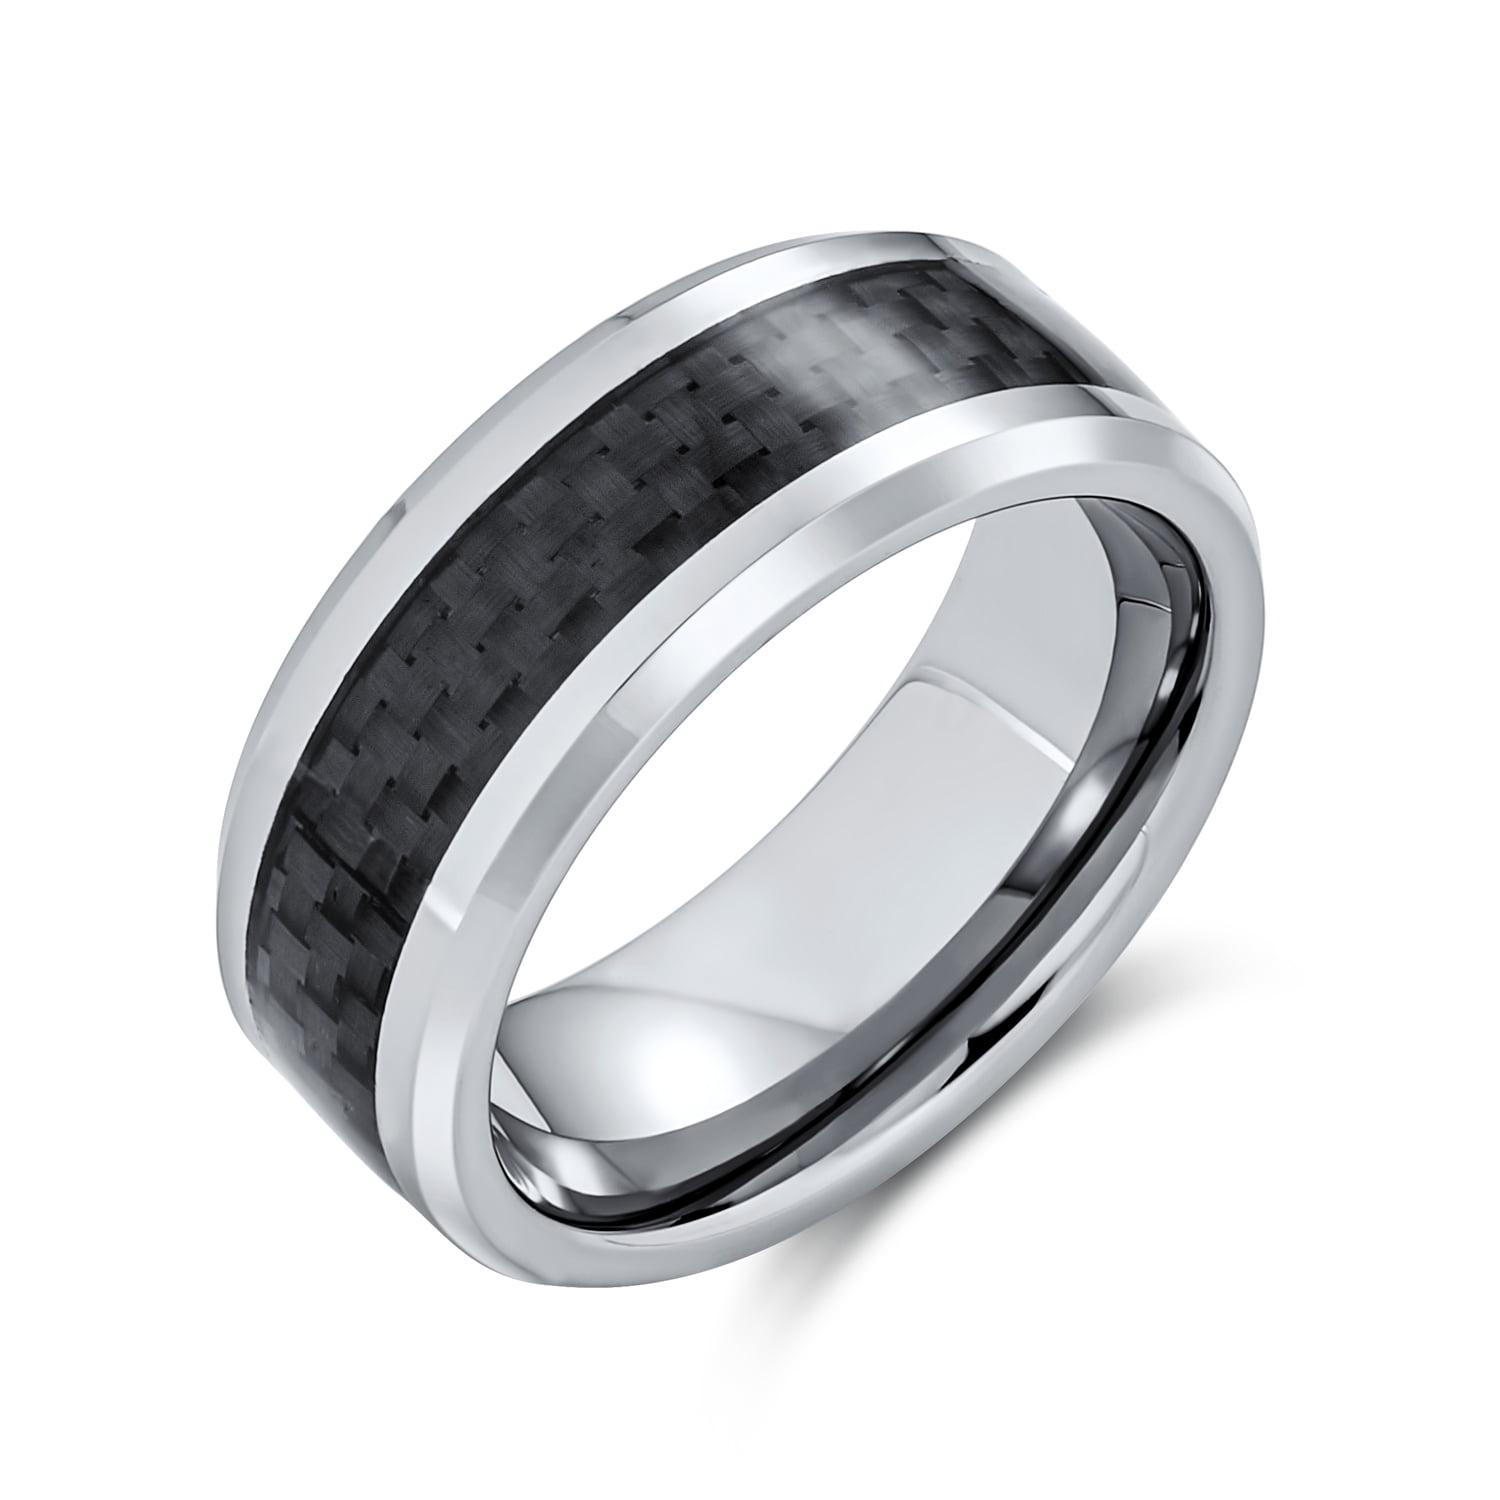 Details about   8mm Black Plated Titanium Bevel Edge Green Carbon Fiber Inlay Men's Wedding Band